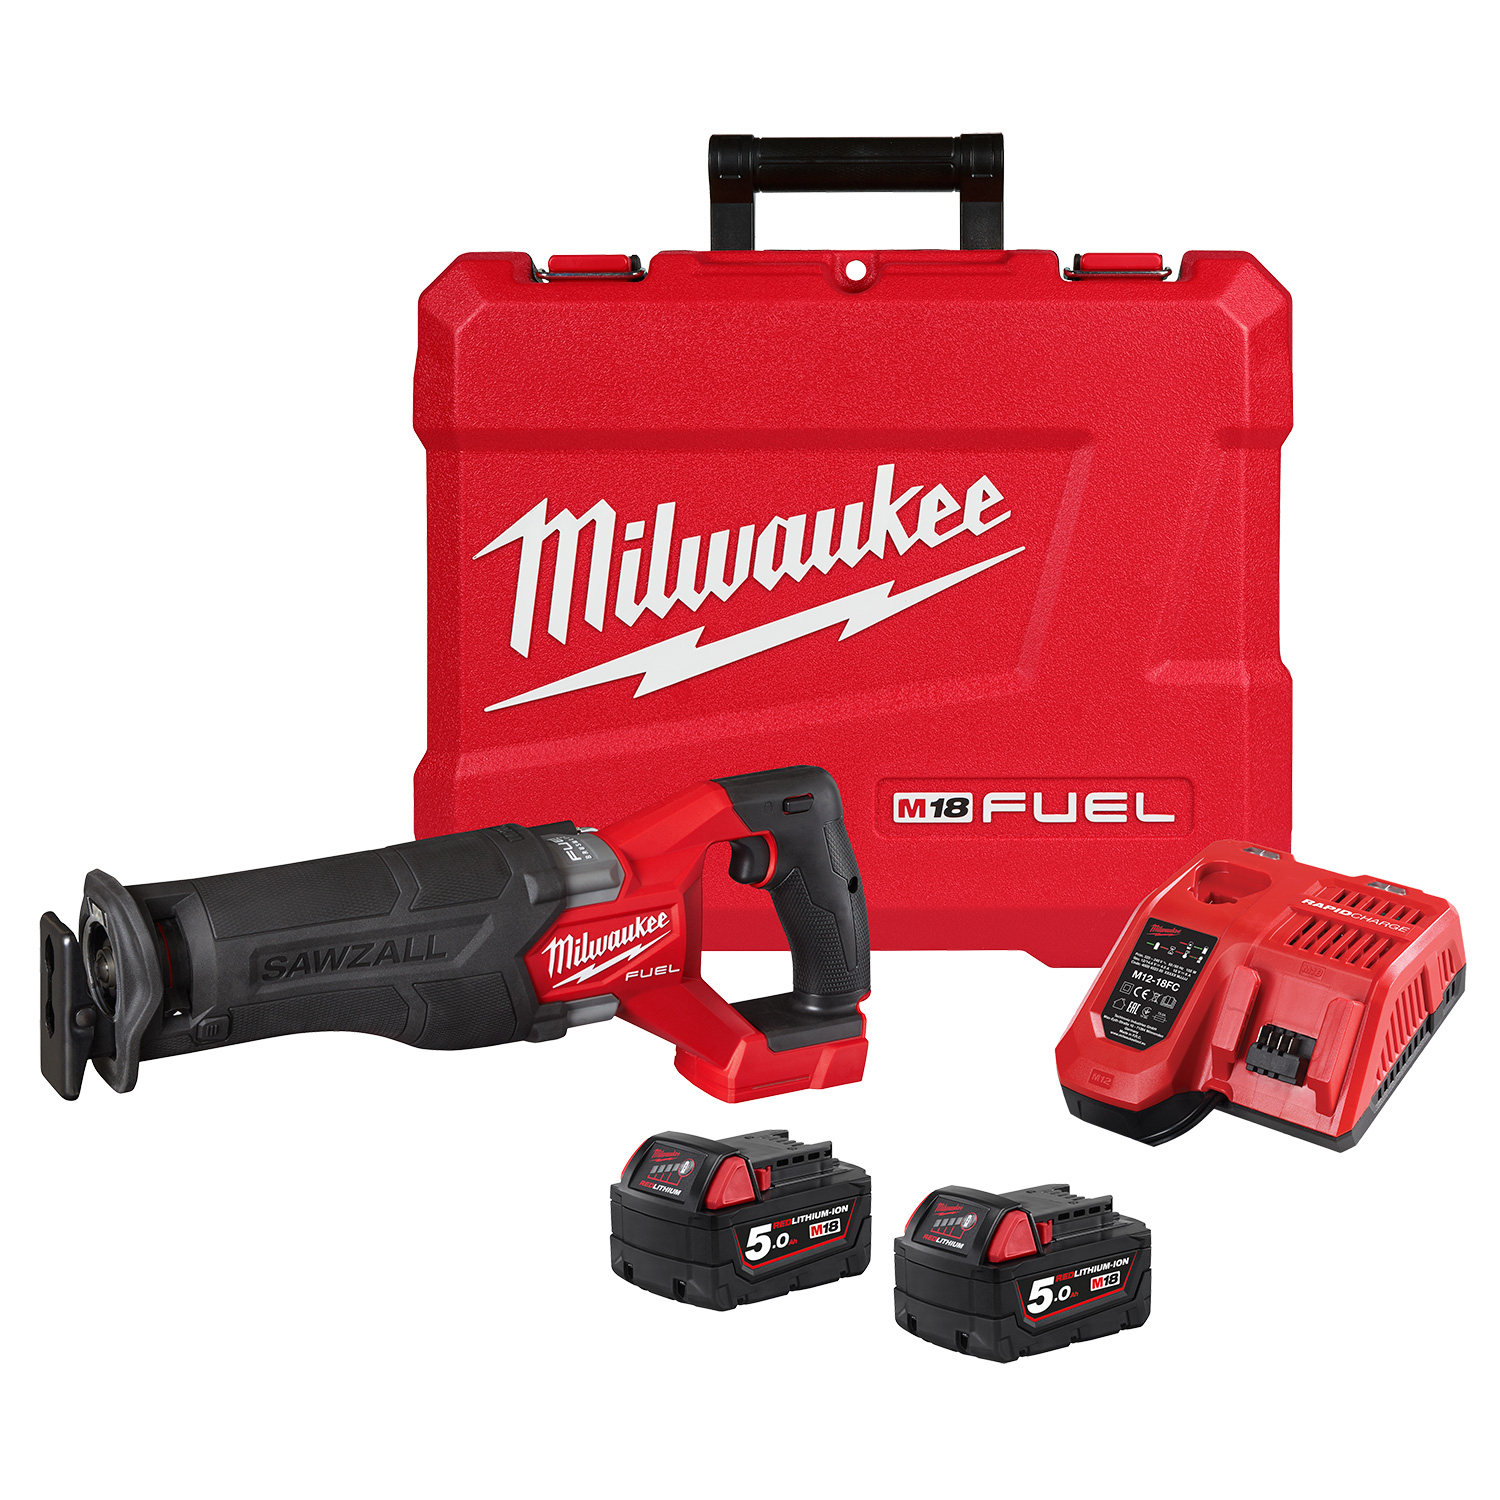 Vervreemden Collectief kennisgeving Milwaukee 18V Fuel Brushless Sawzall Reciprocating Saw 5.0ah Set  M18CSX2-502C | tools.com